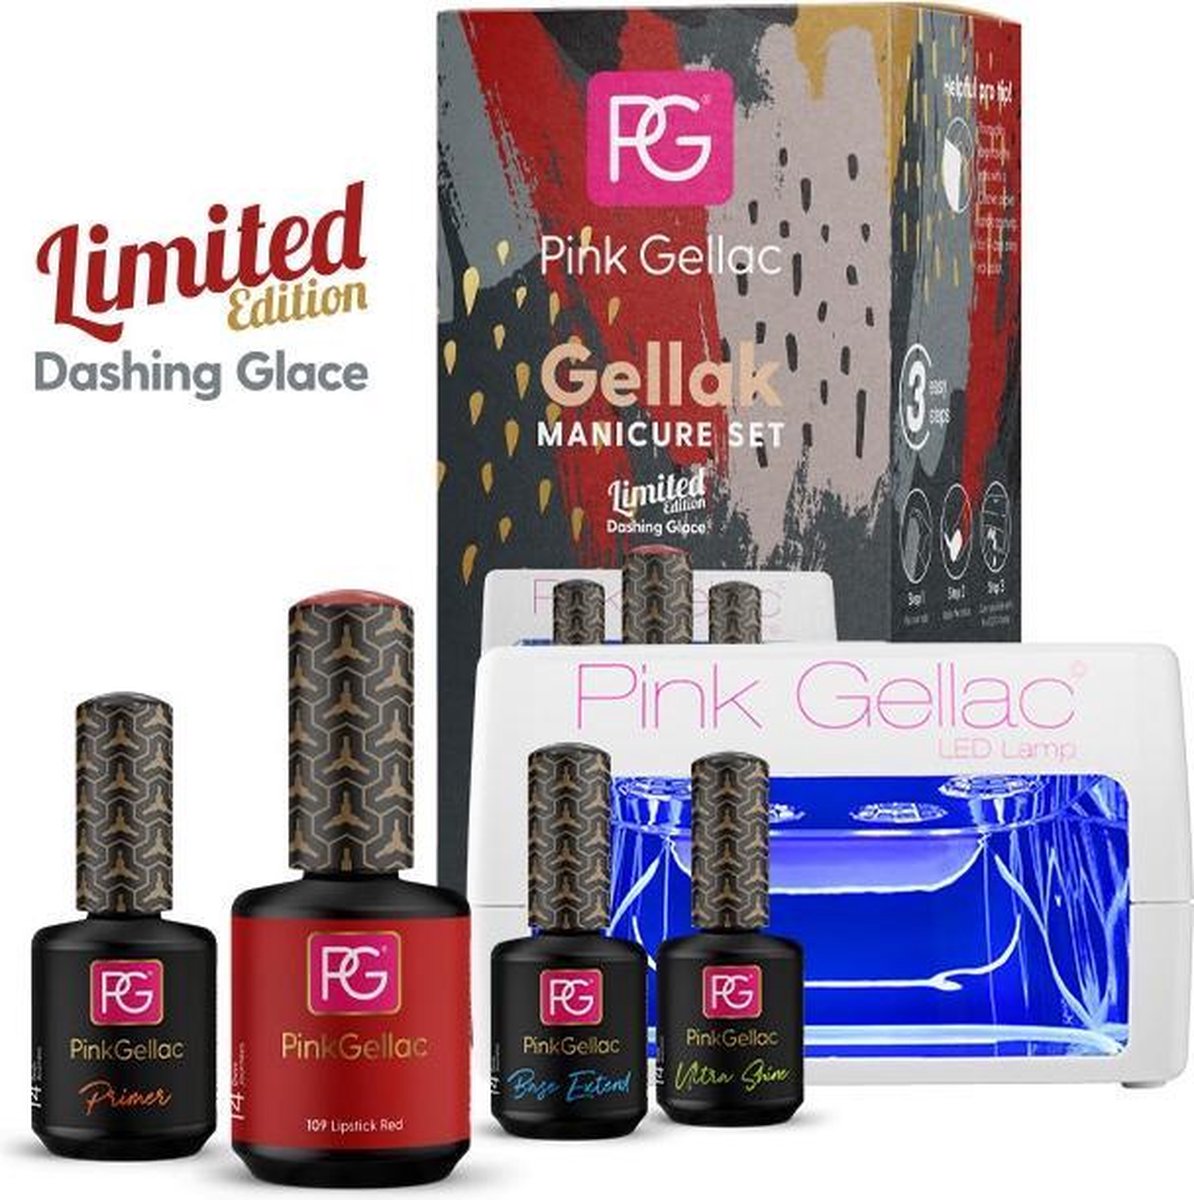 Leerling Uitbarsten Dinkarville 35% Korting Manicure Set Dashing Glace incl. 1 Gratis kleur | bol.com